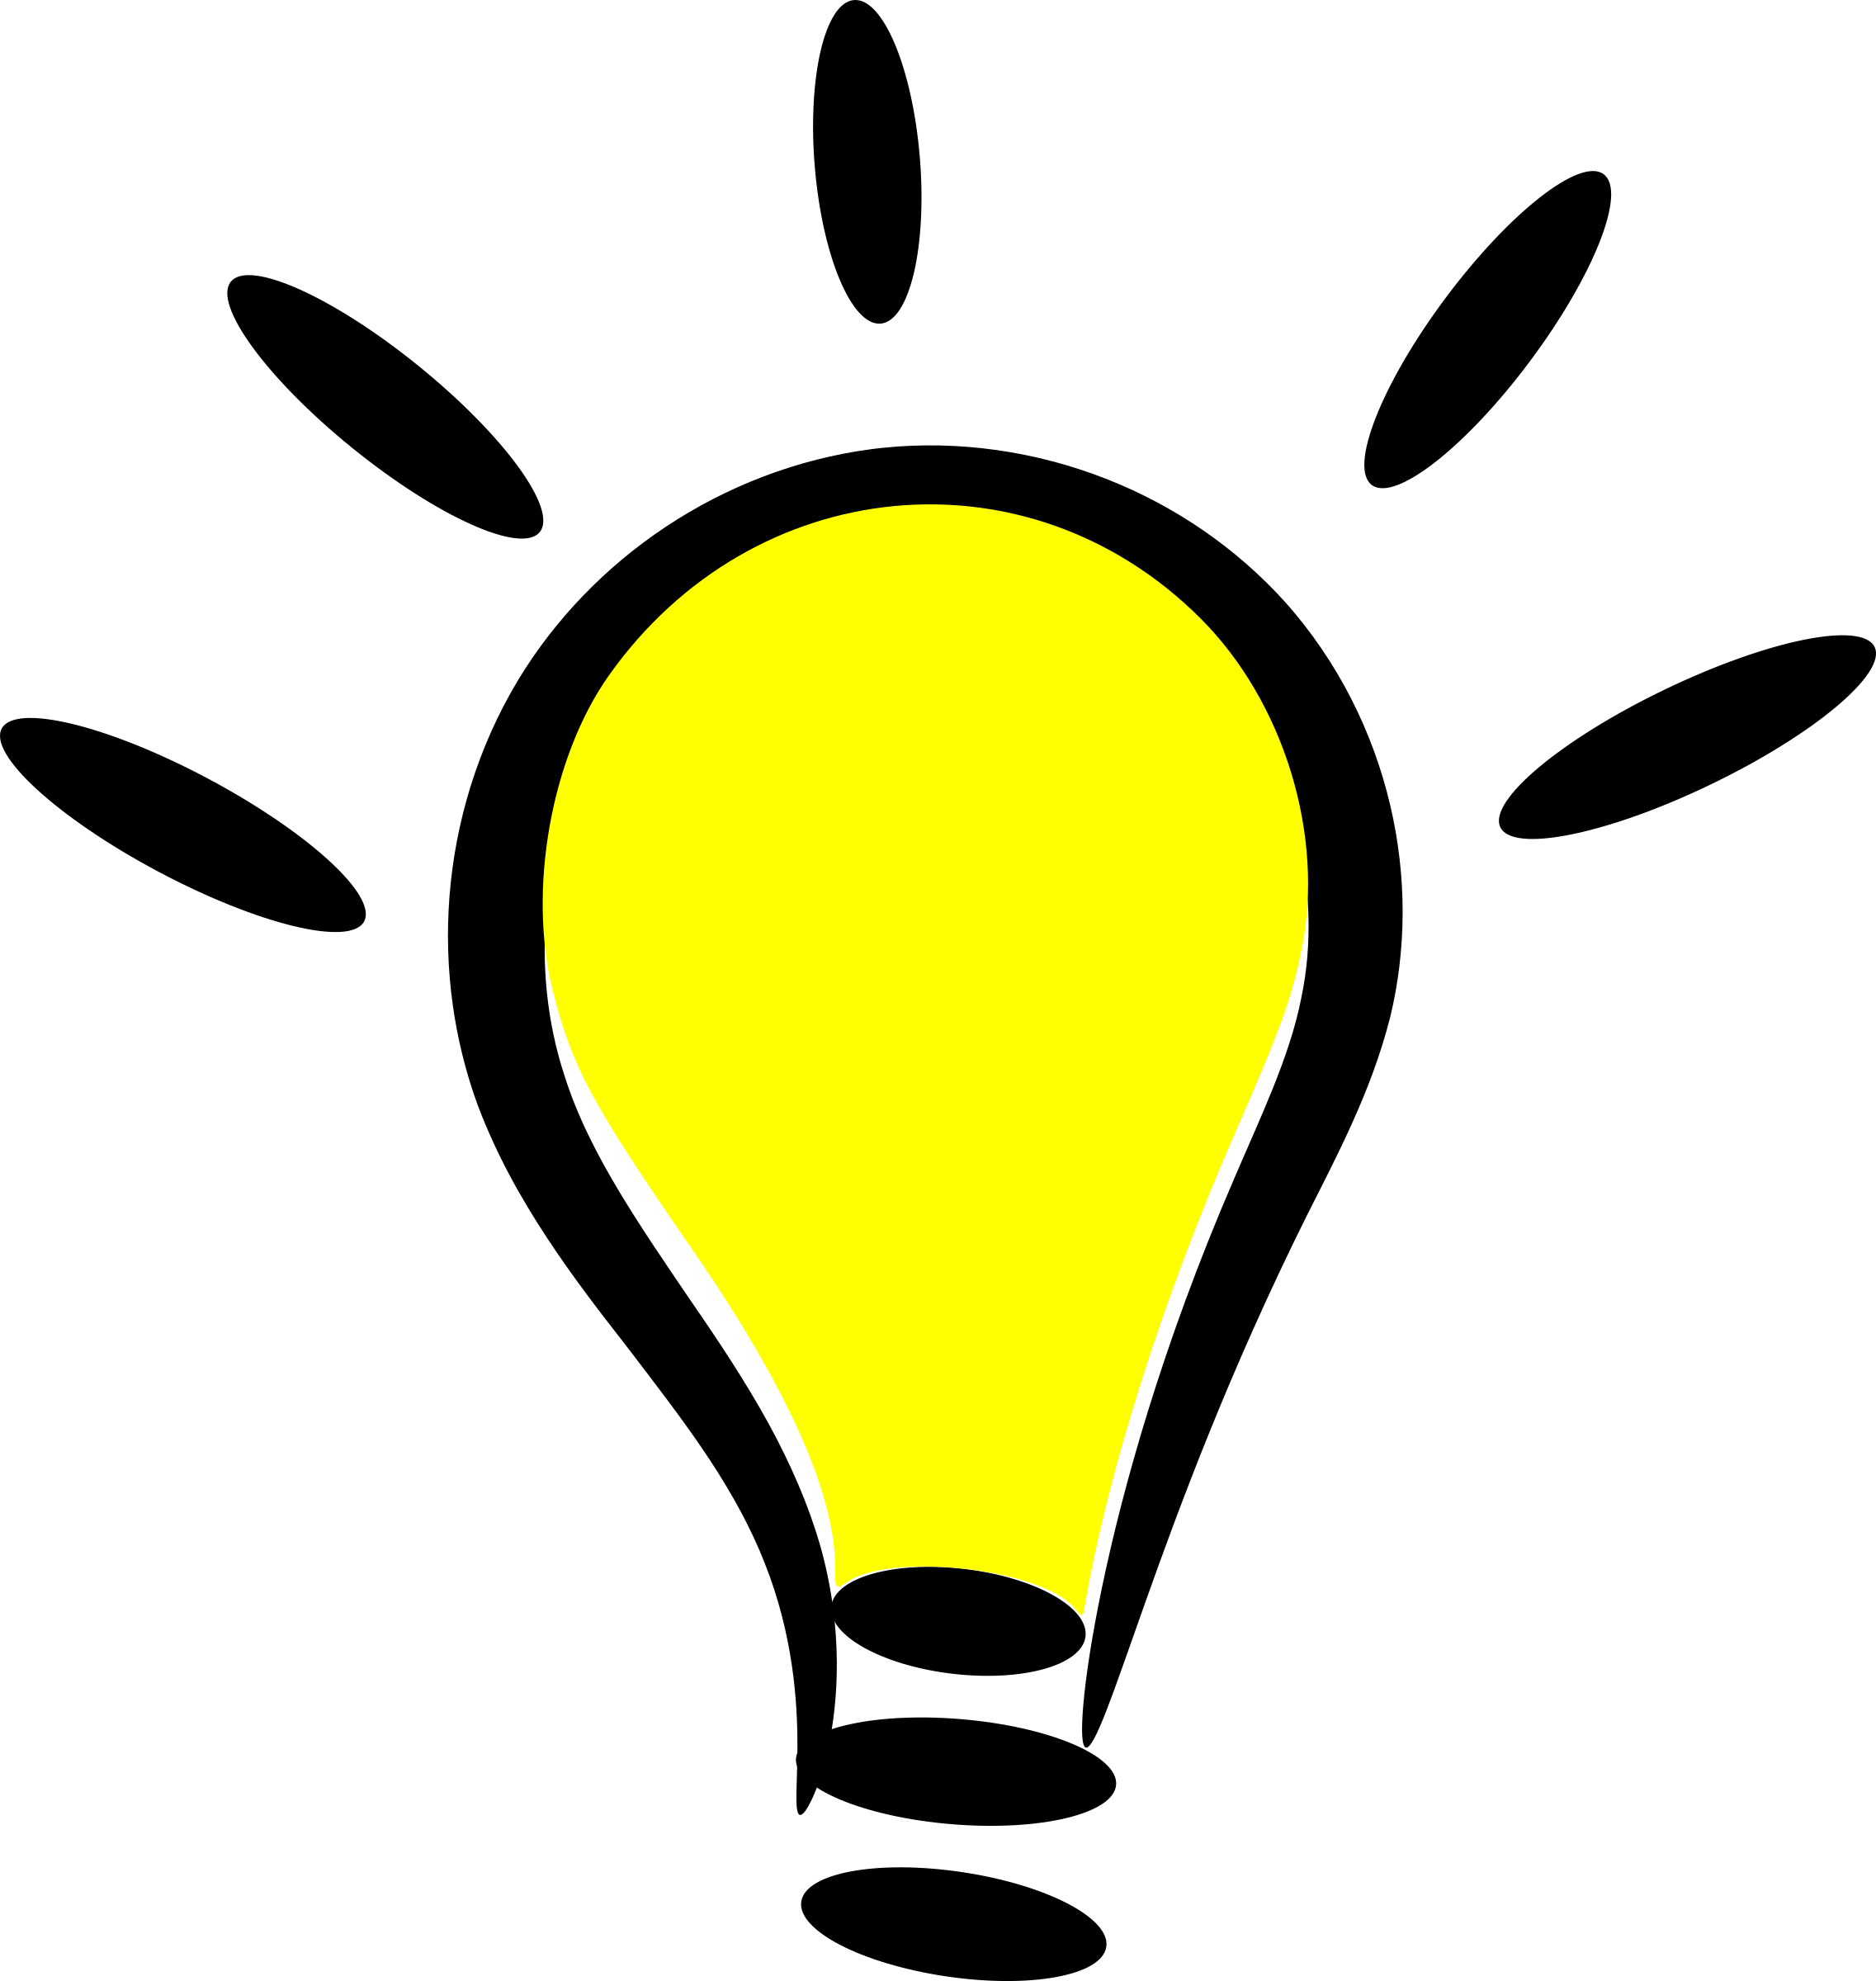 Light bulb clipart images